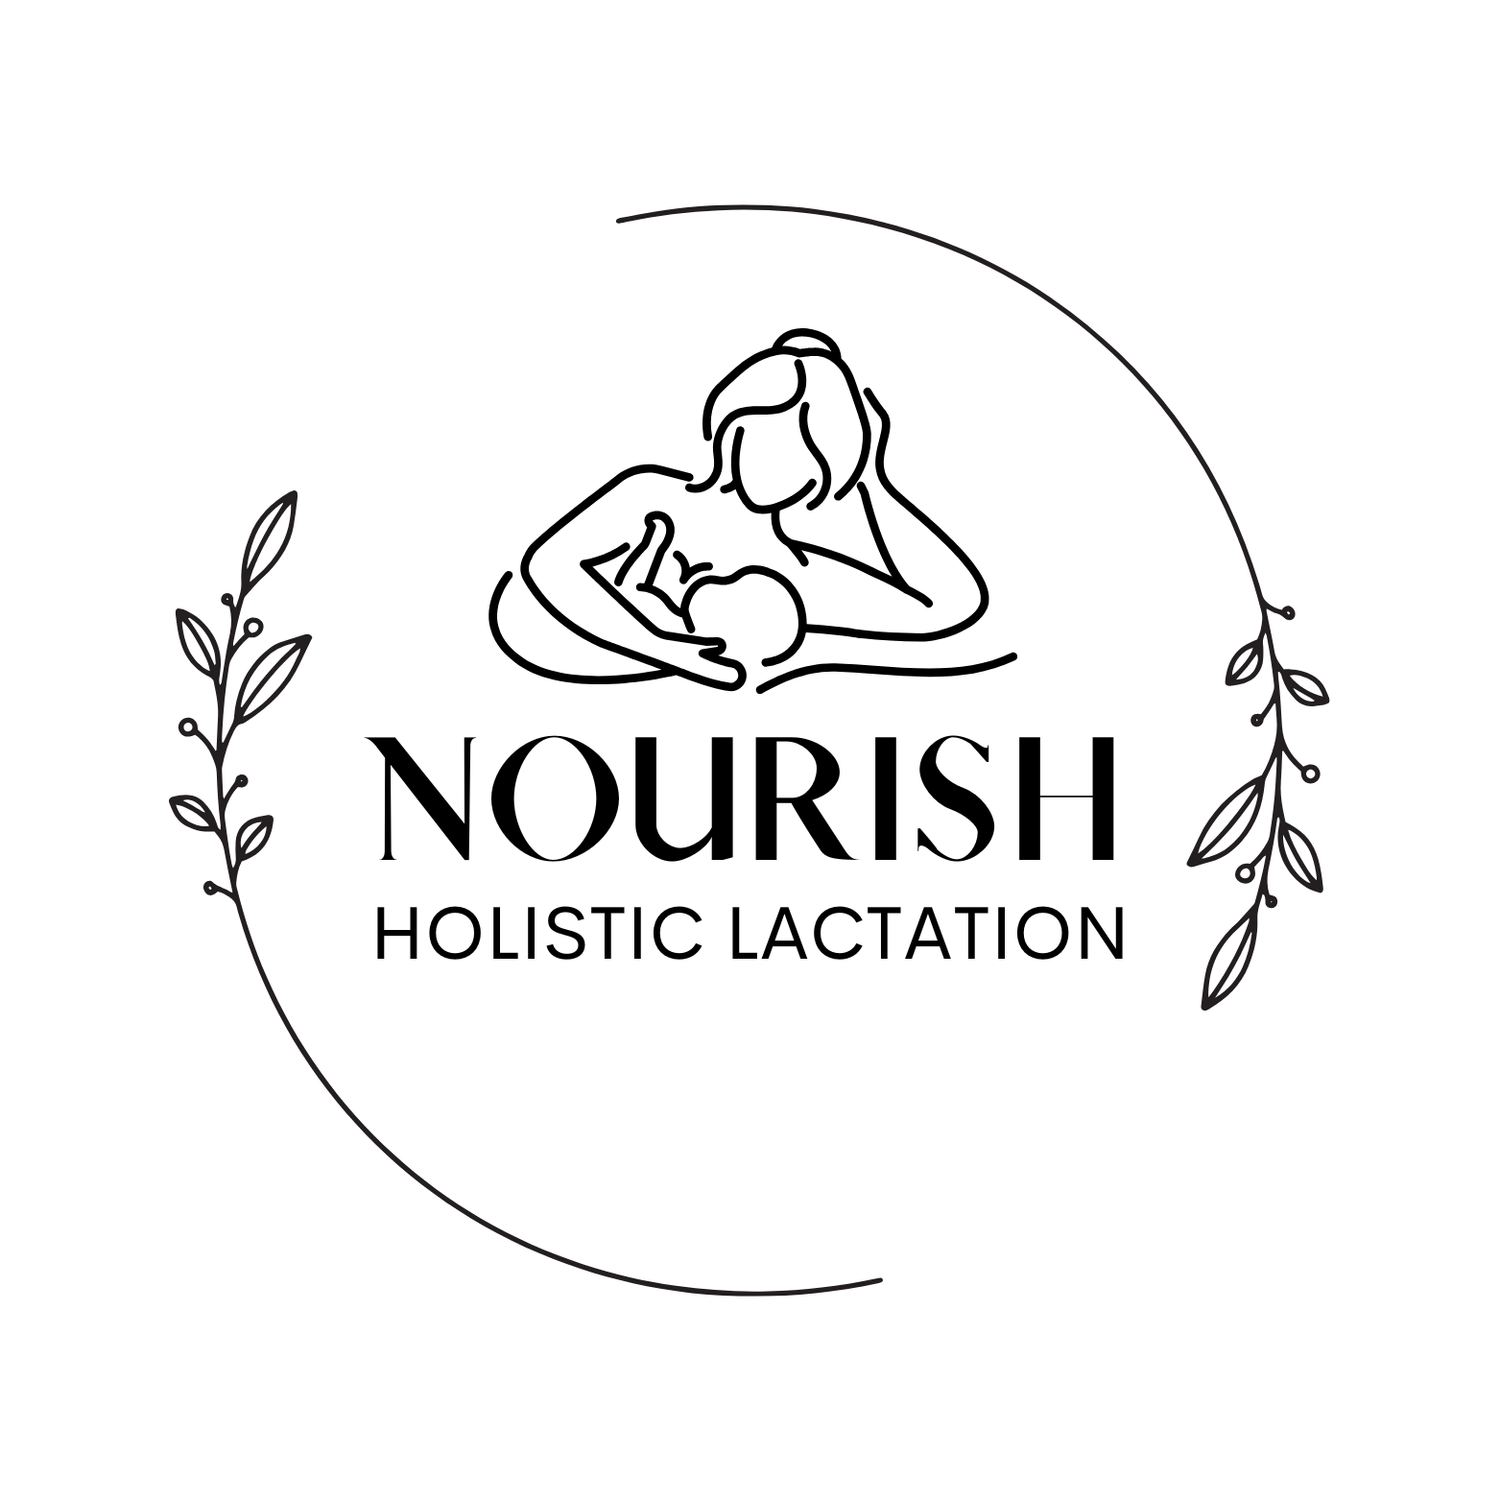 Nourish Holistic Lactation